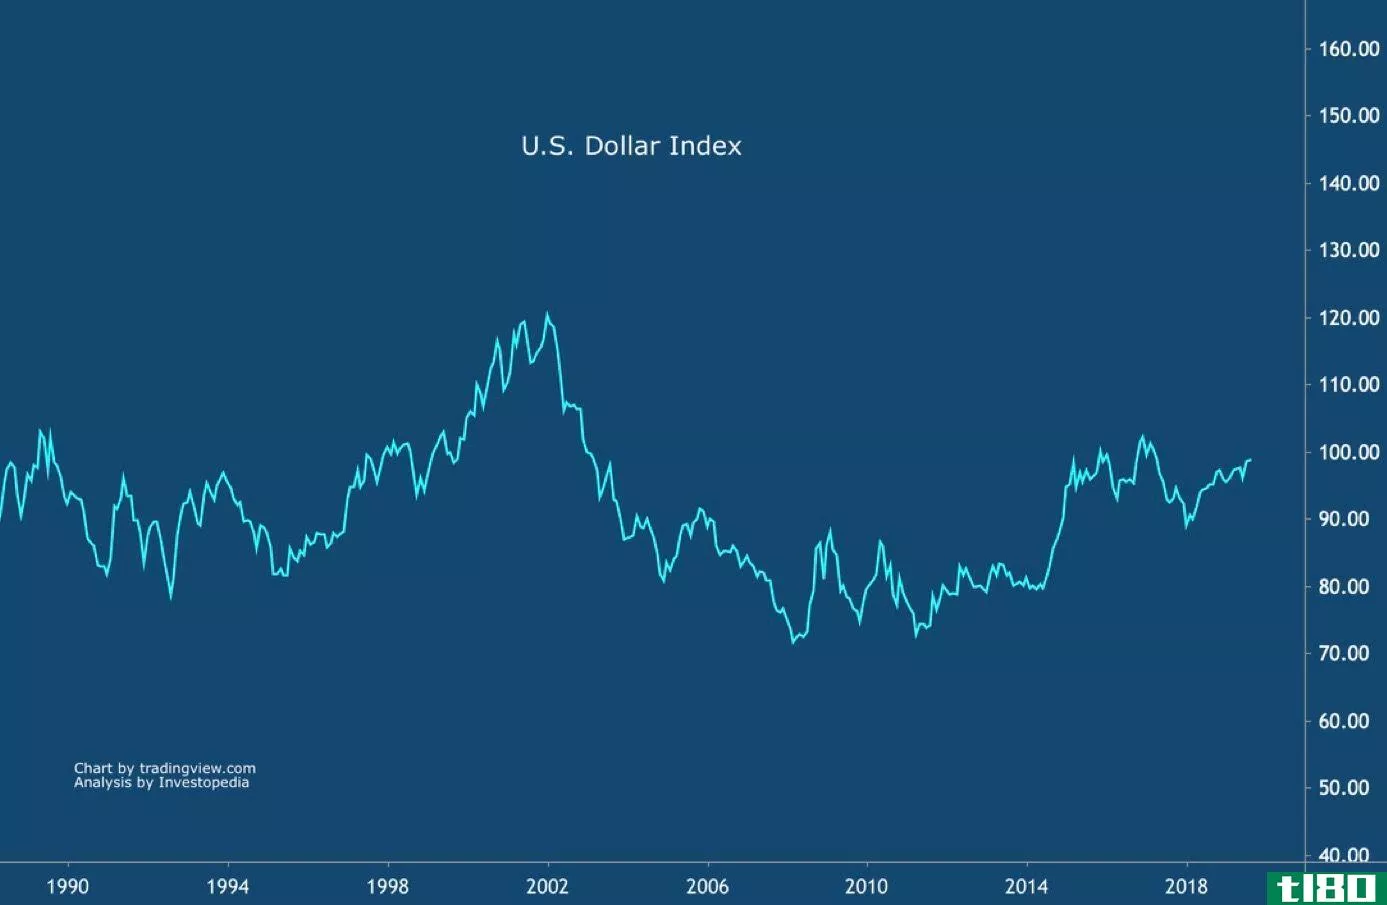 The U.S. dollar index example